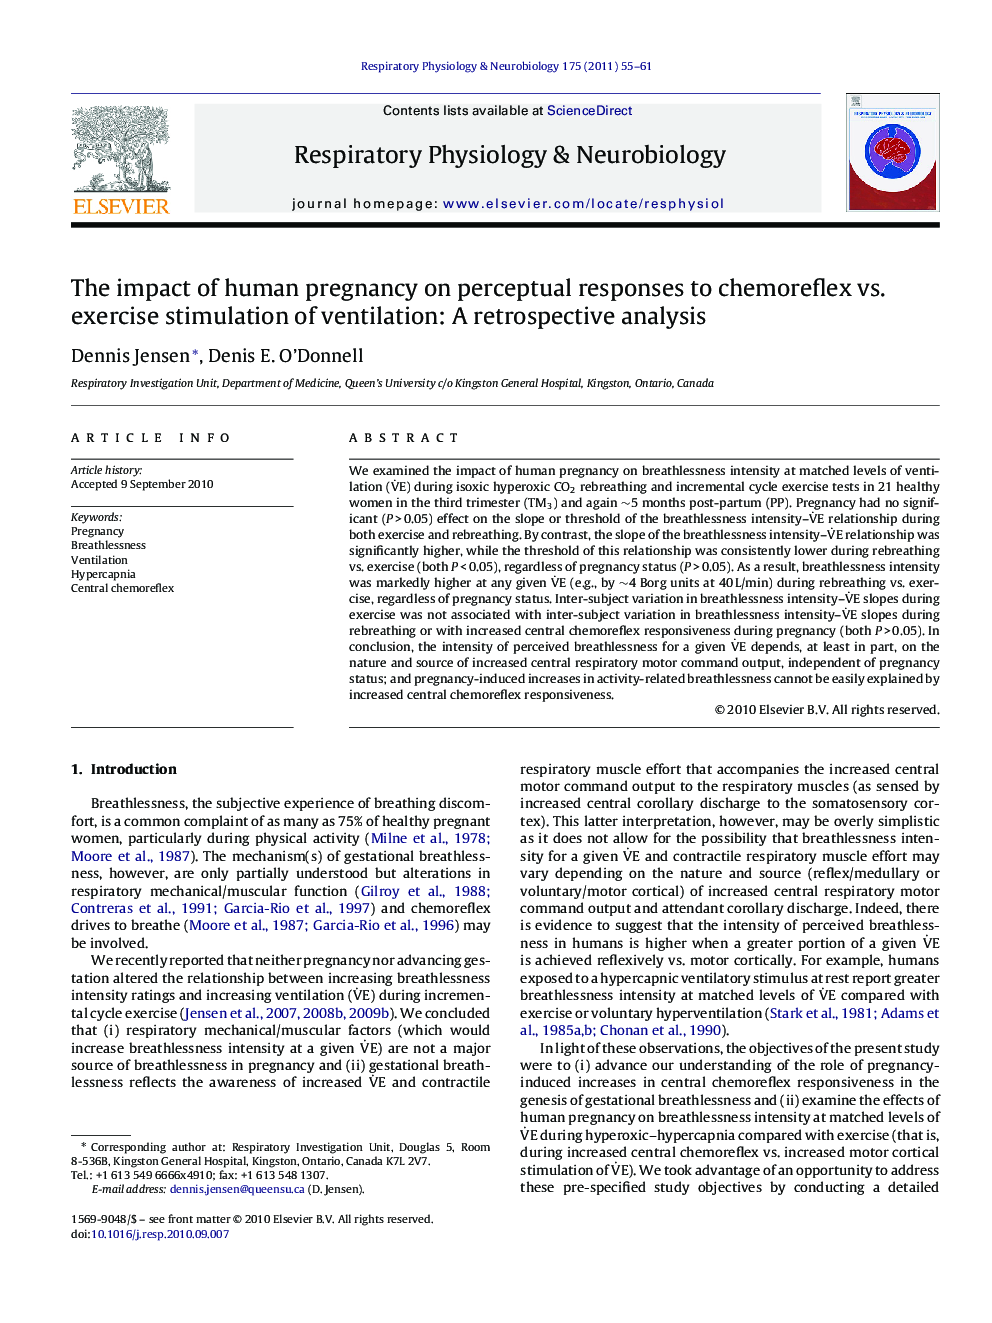 The impact of human pregnancy on perceptual responses to chemoreflex vs. exercise stimulation of ventilation: A retrospective analysis